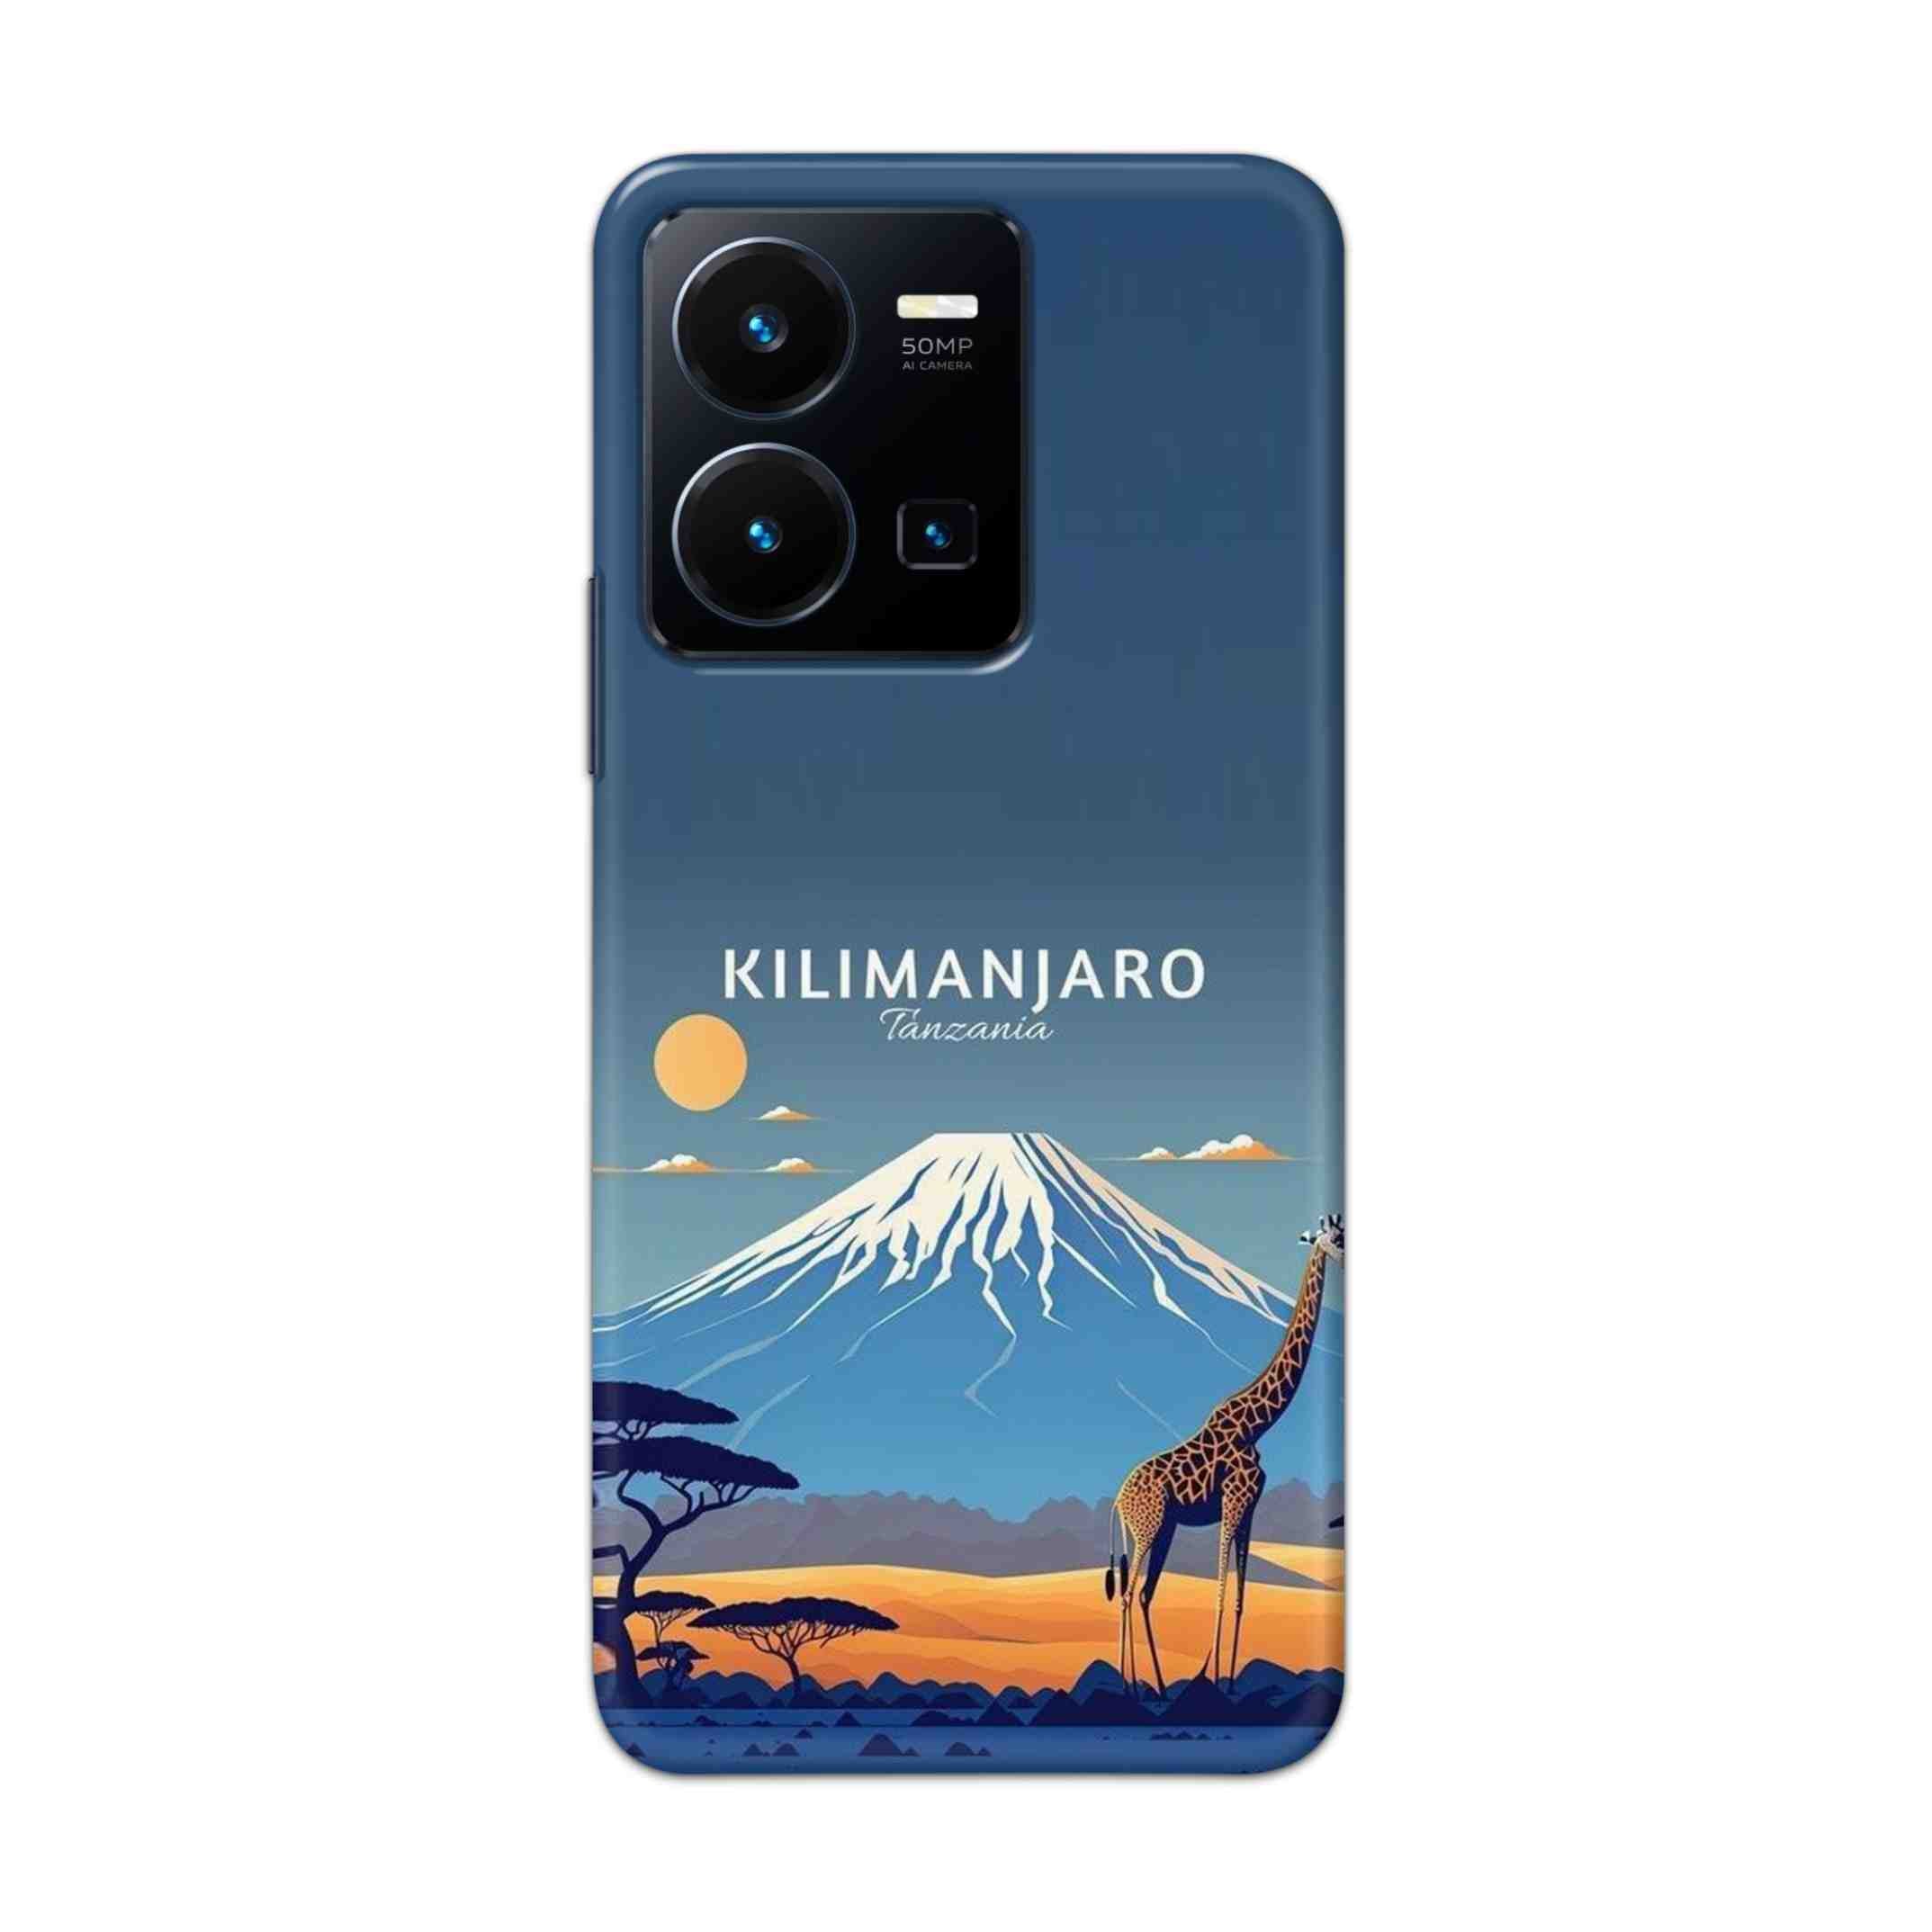 Buy Kilimanjaro Hard Back Mobile Phone Case Cover For Vivo Y35 2022 Online